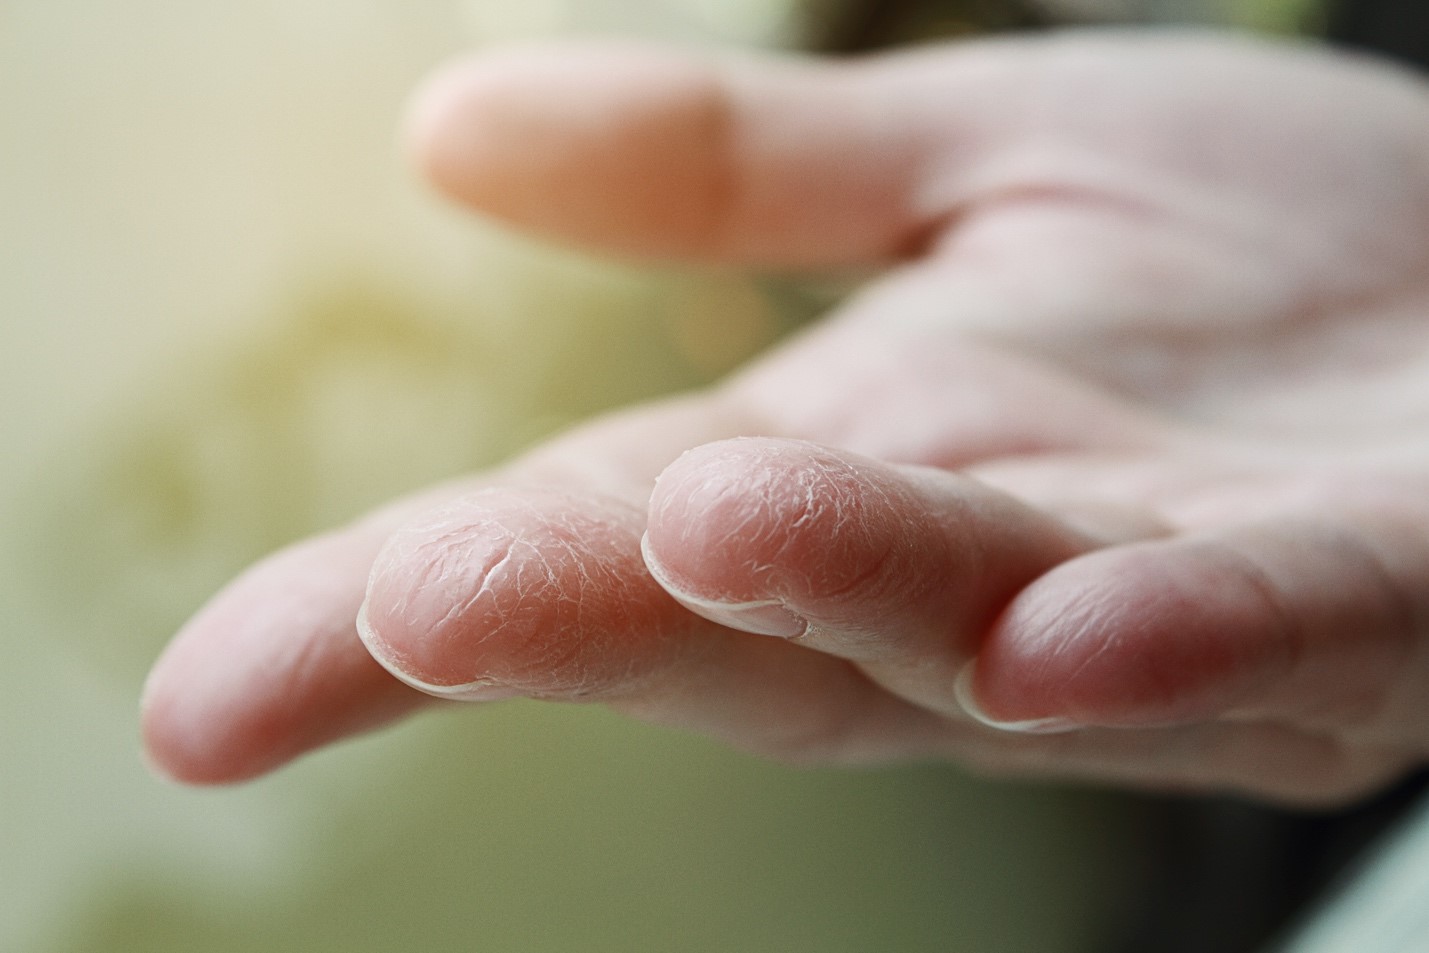 Apakah Kandungan Pewangi Hand Sanitizer Bisa Sebabkan Kulit Kering dan Iritasi?